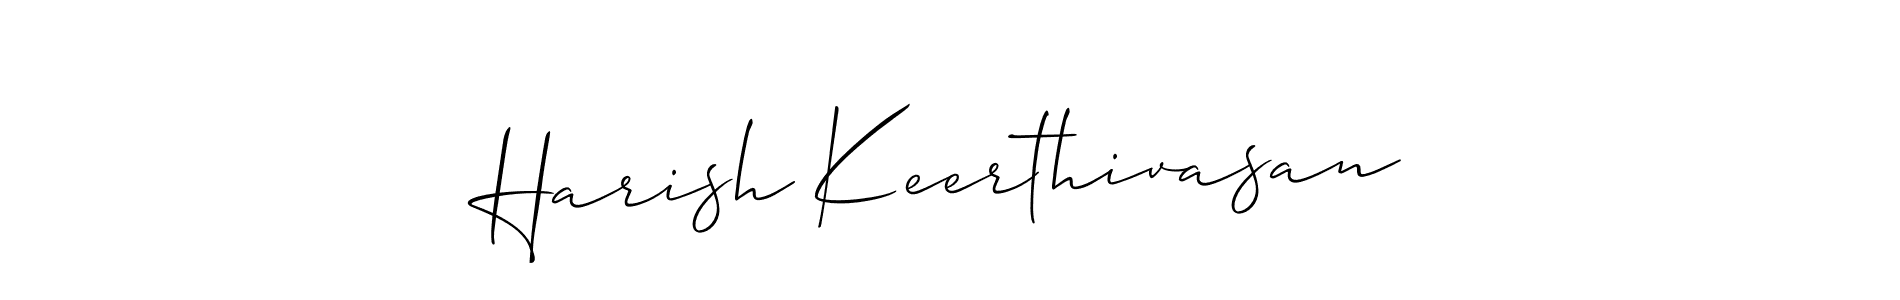 How to Draw Harish Keerthivasan signature style? Allison_Script is a latest design signature styles for name Harish Keerthivasan. Harish Keerthivasan signature style 2 images and pictures png